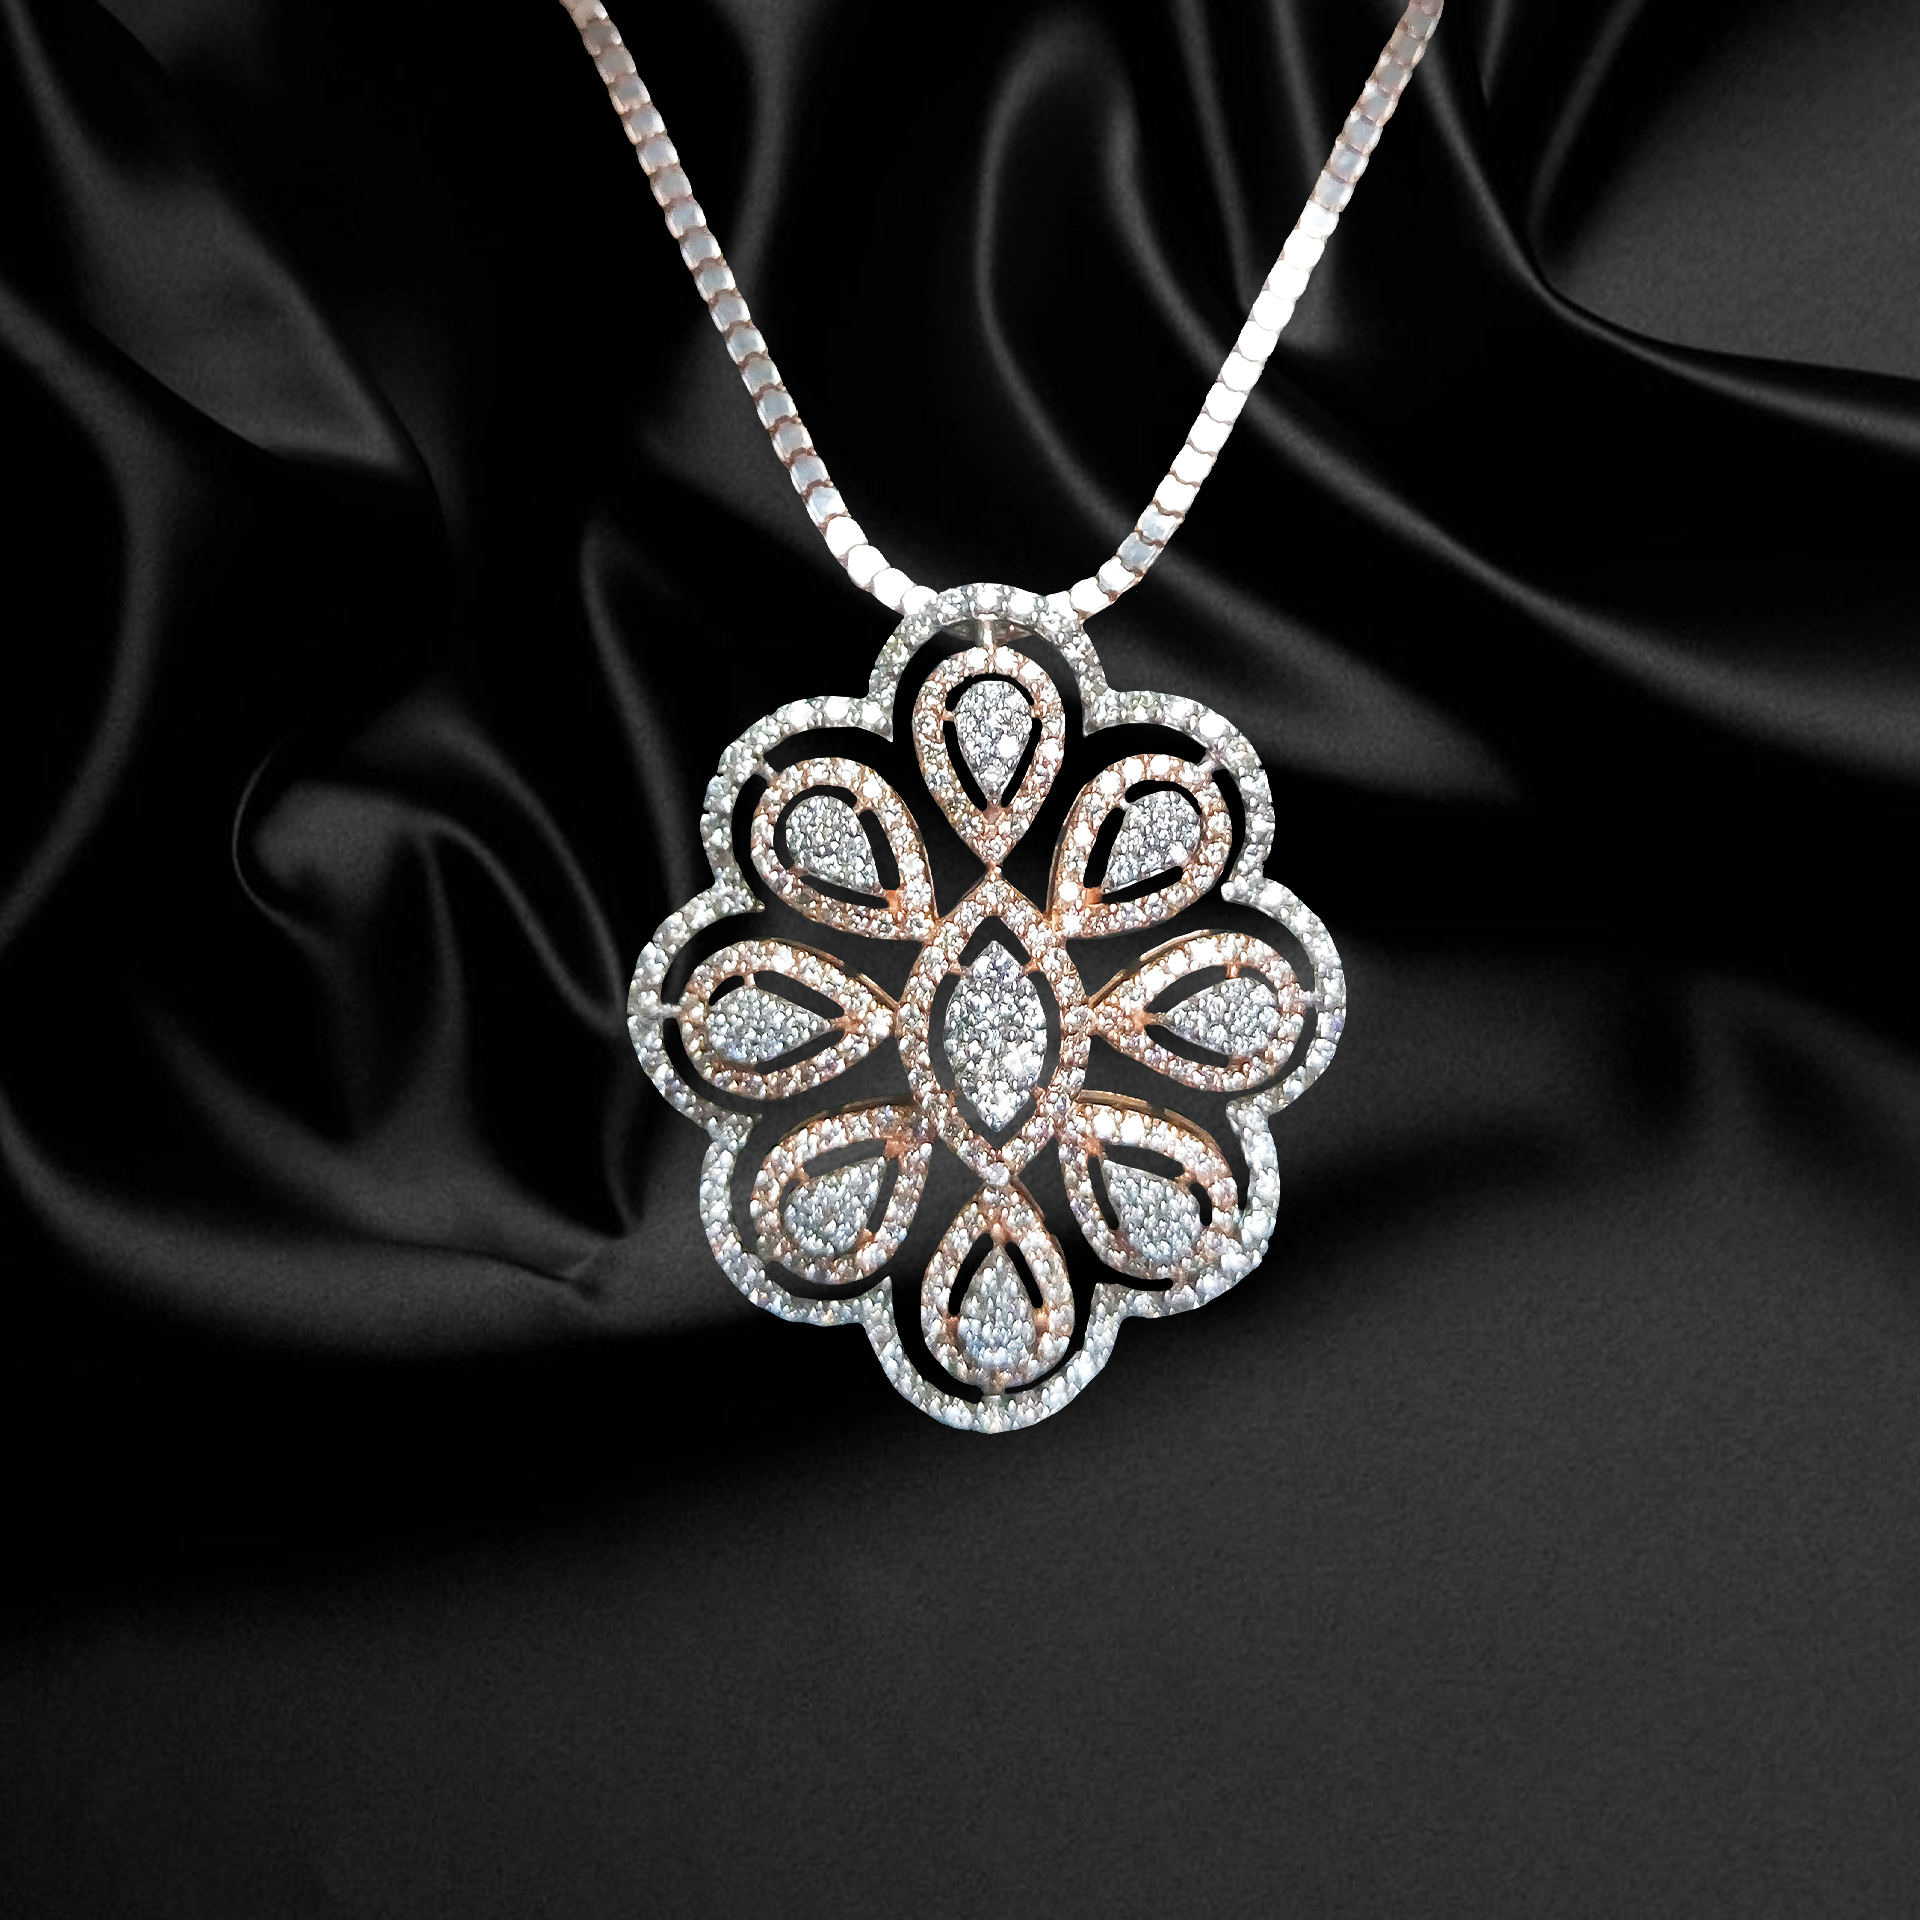 The Flower Diamond Pendant